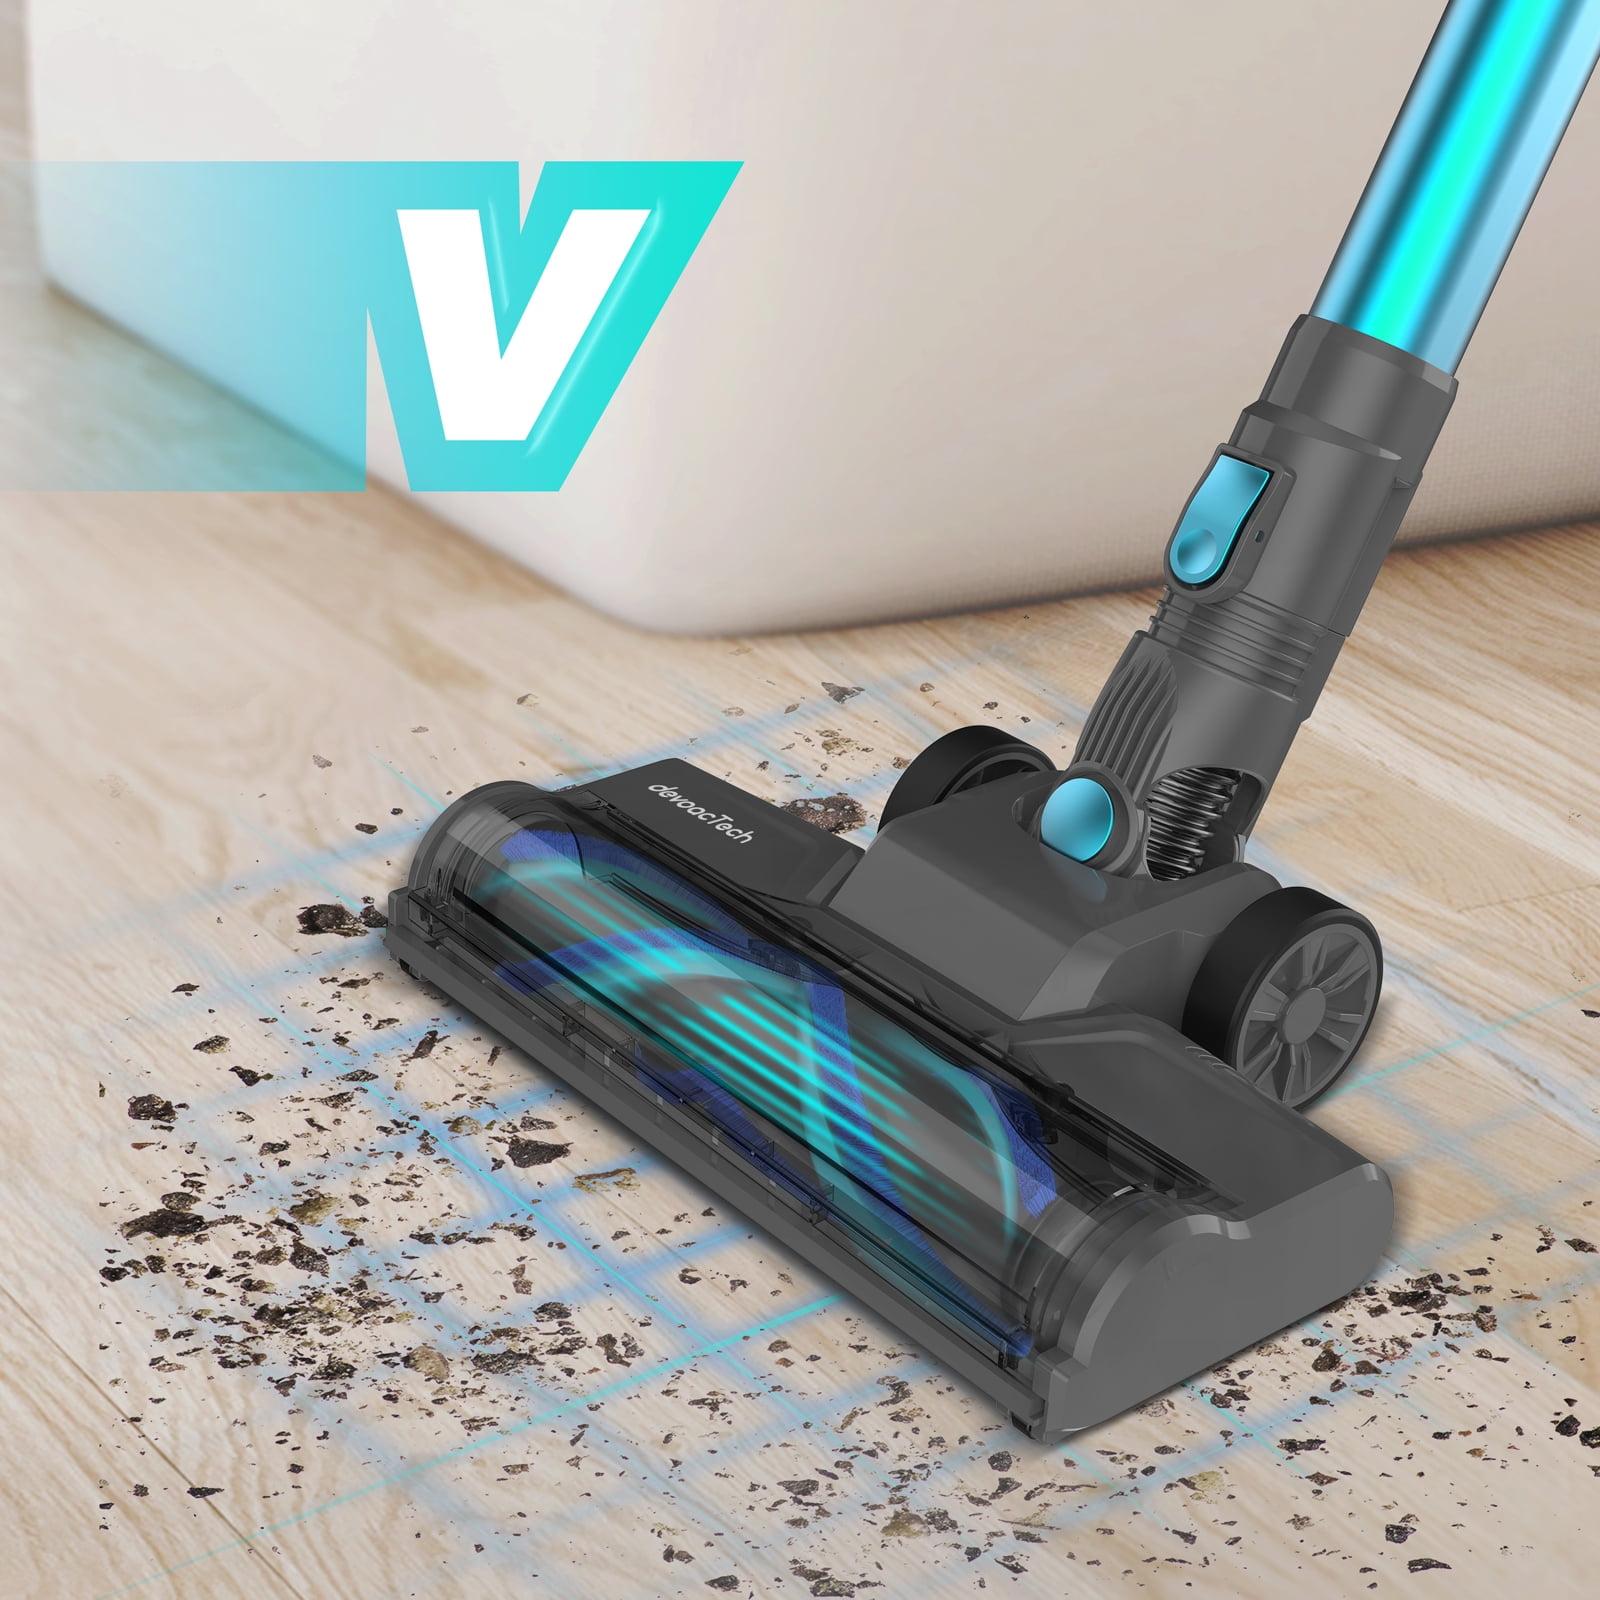  DEVOAC Cordless Vacuum Cleaner, Lightweight Powerful